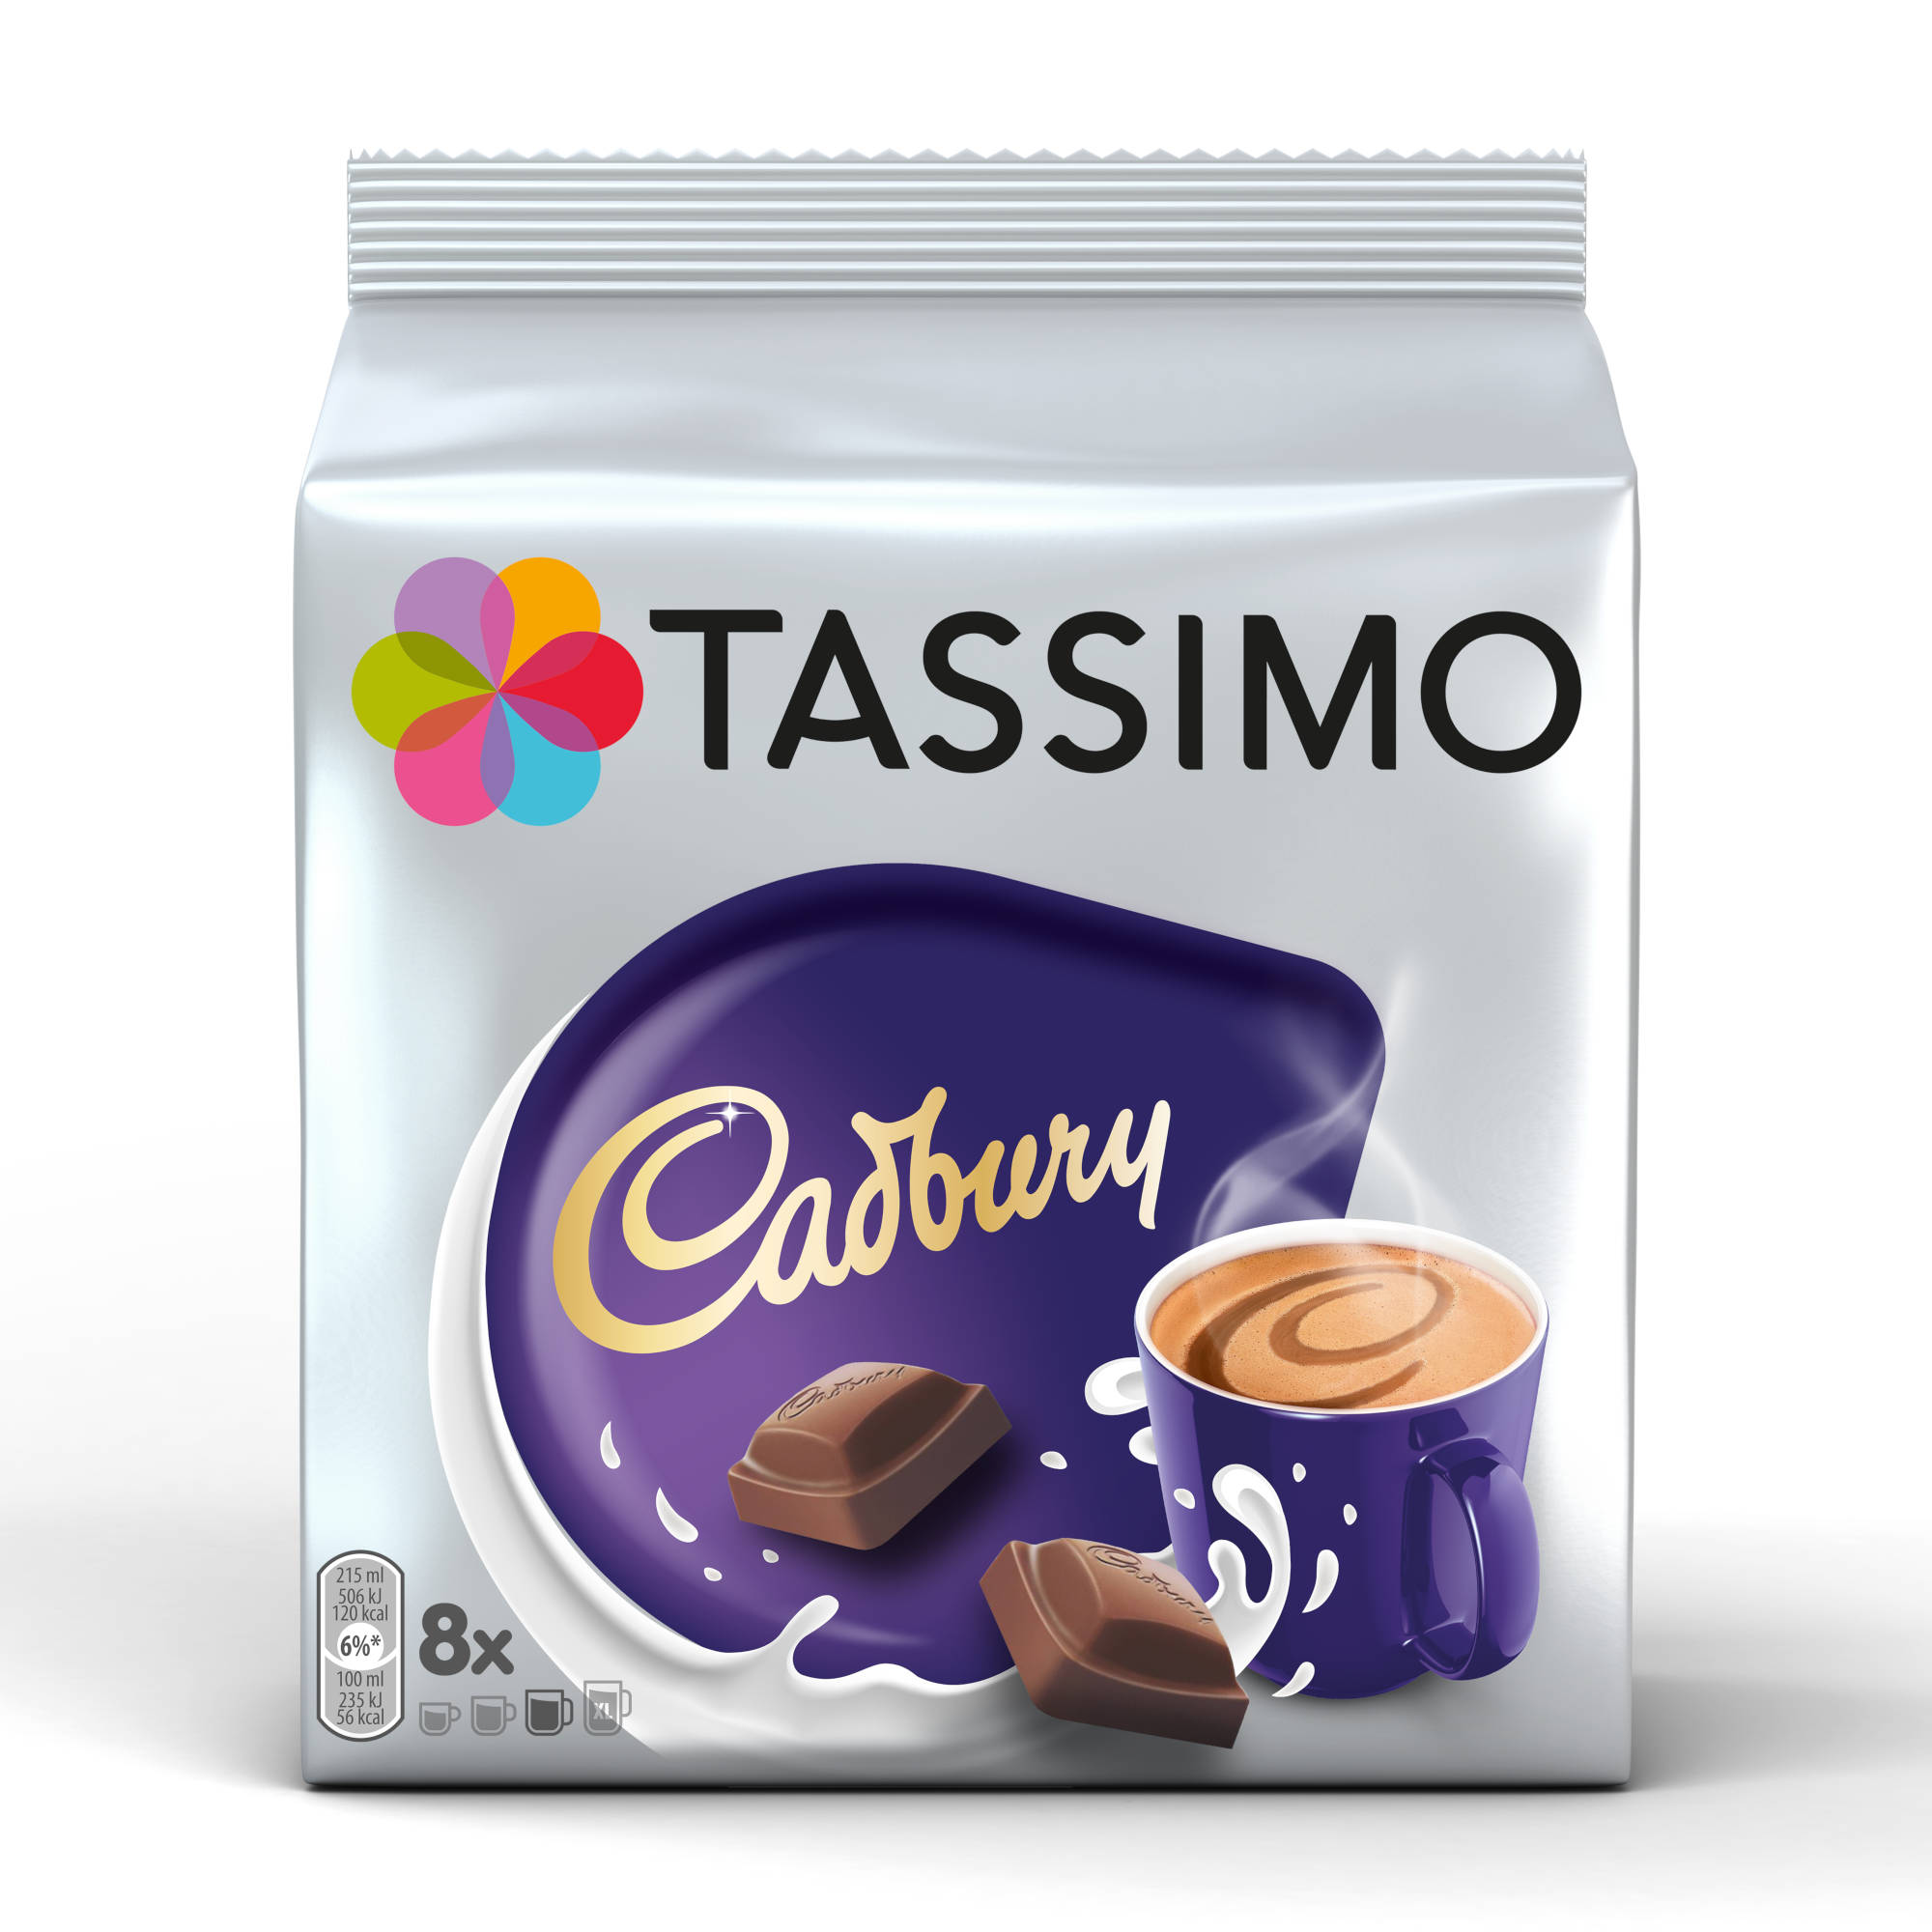 TASSIMO Cadbury (T-Disc Chocolate 8 5 T (Tassimo Maschine Discs Getränke System)) Hot Kakaokapseln x